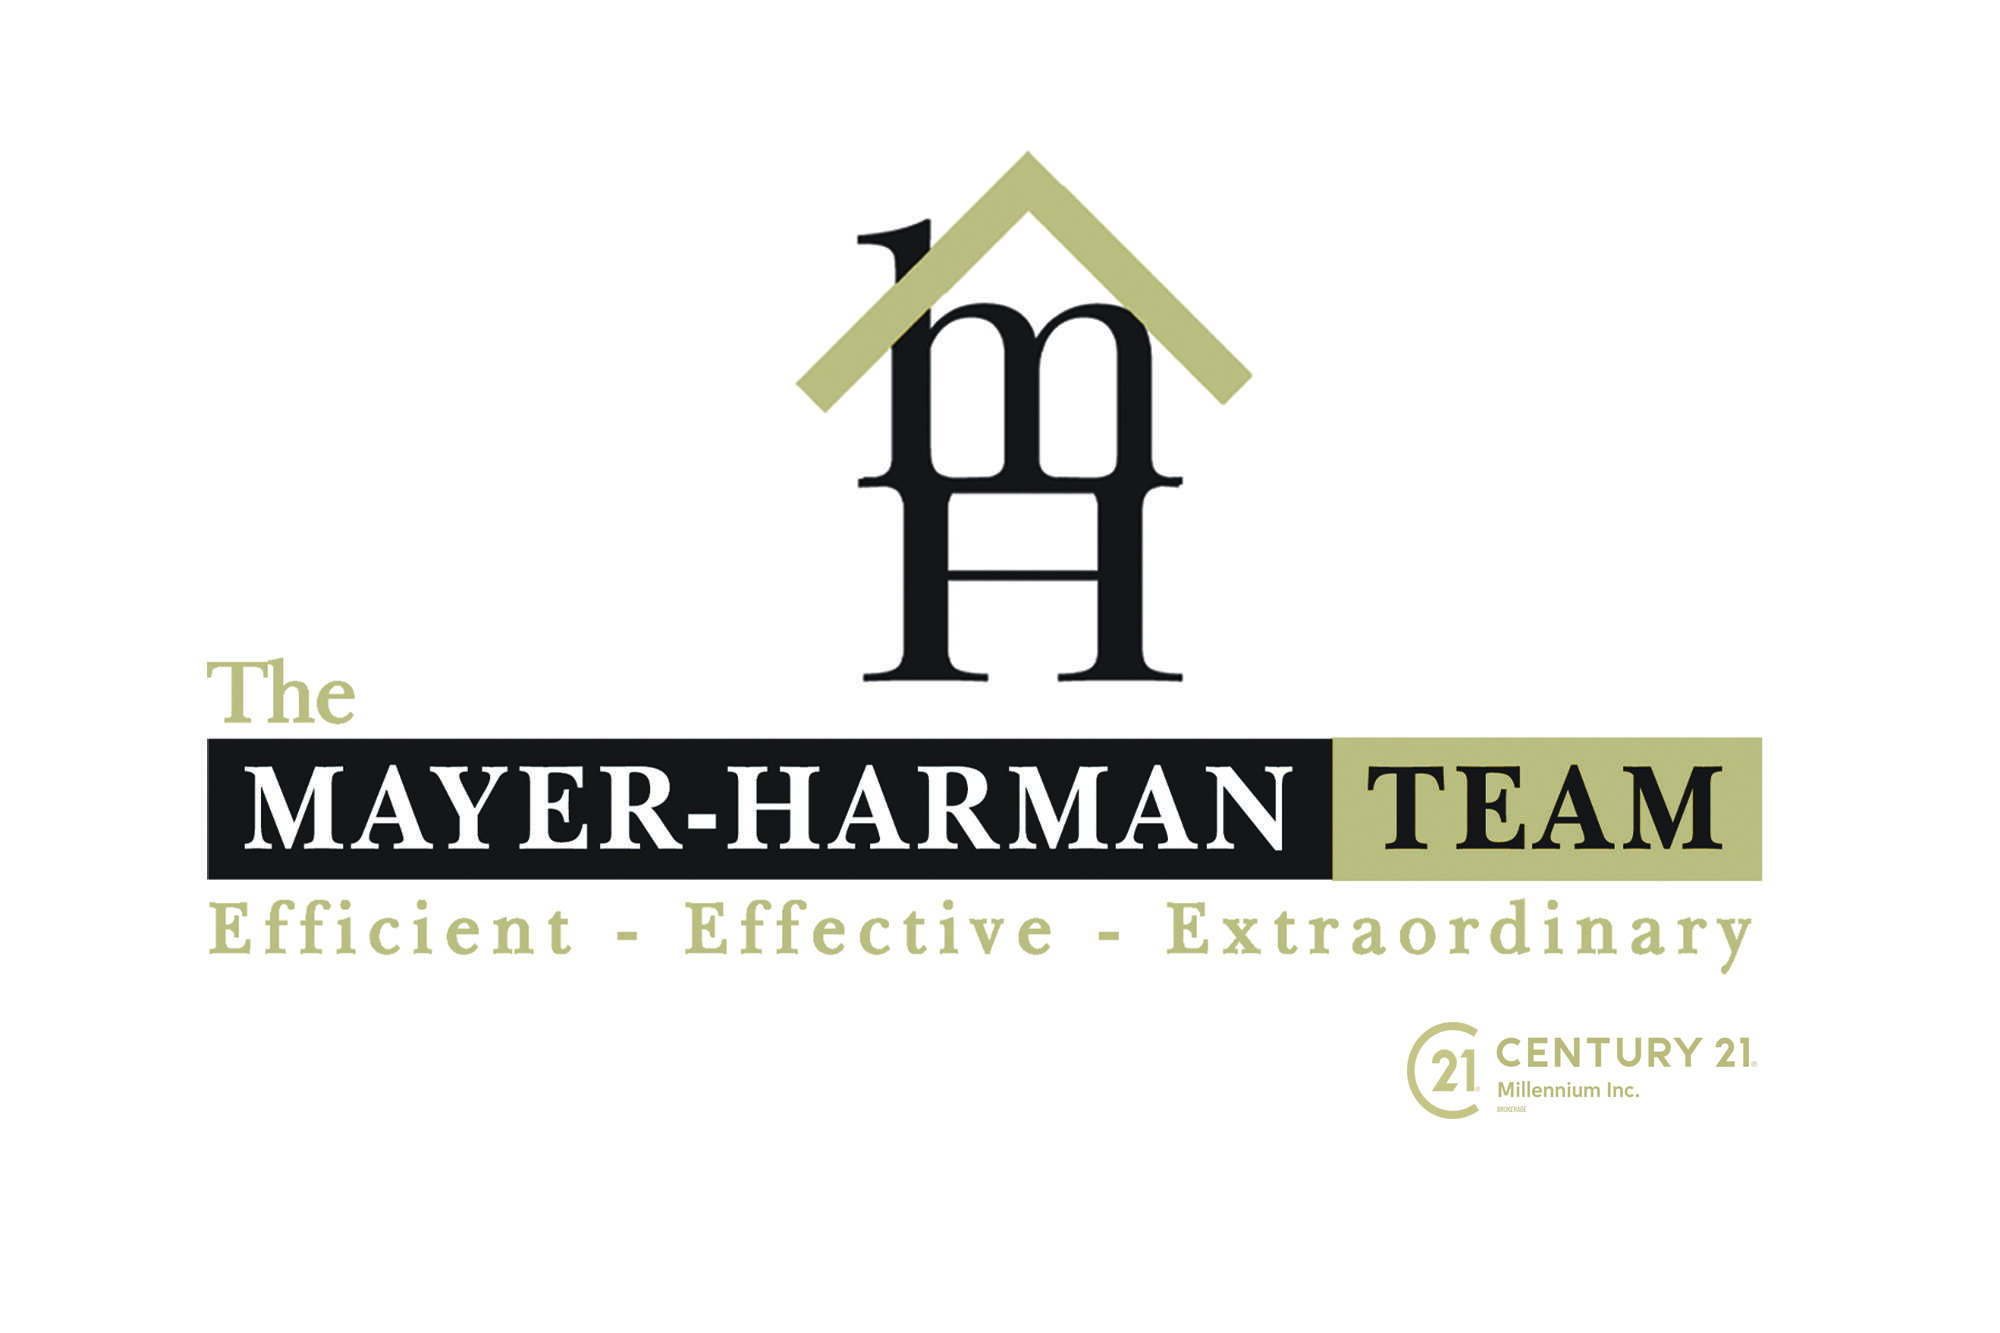 The Mayer-Harman Team